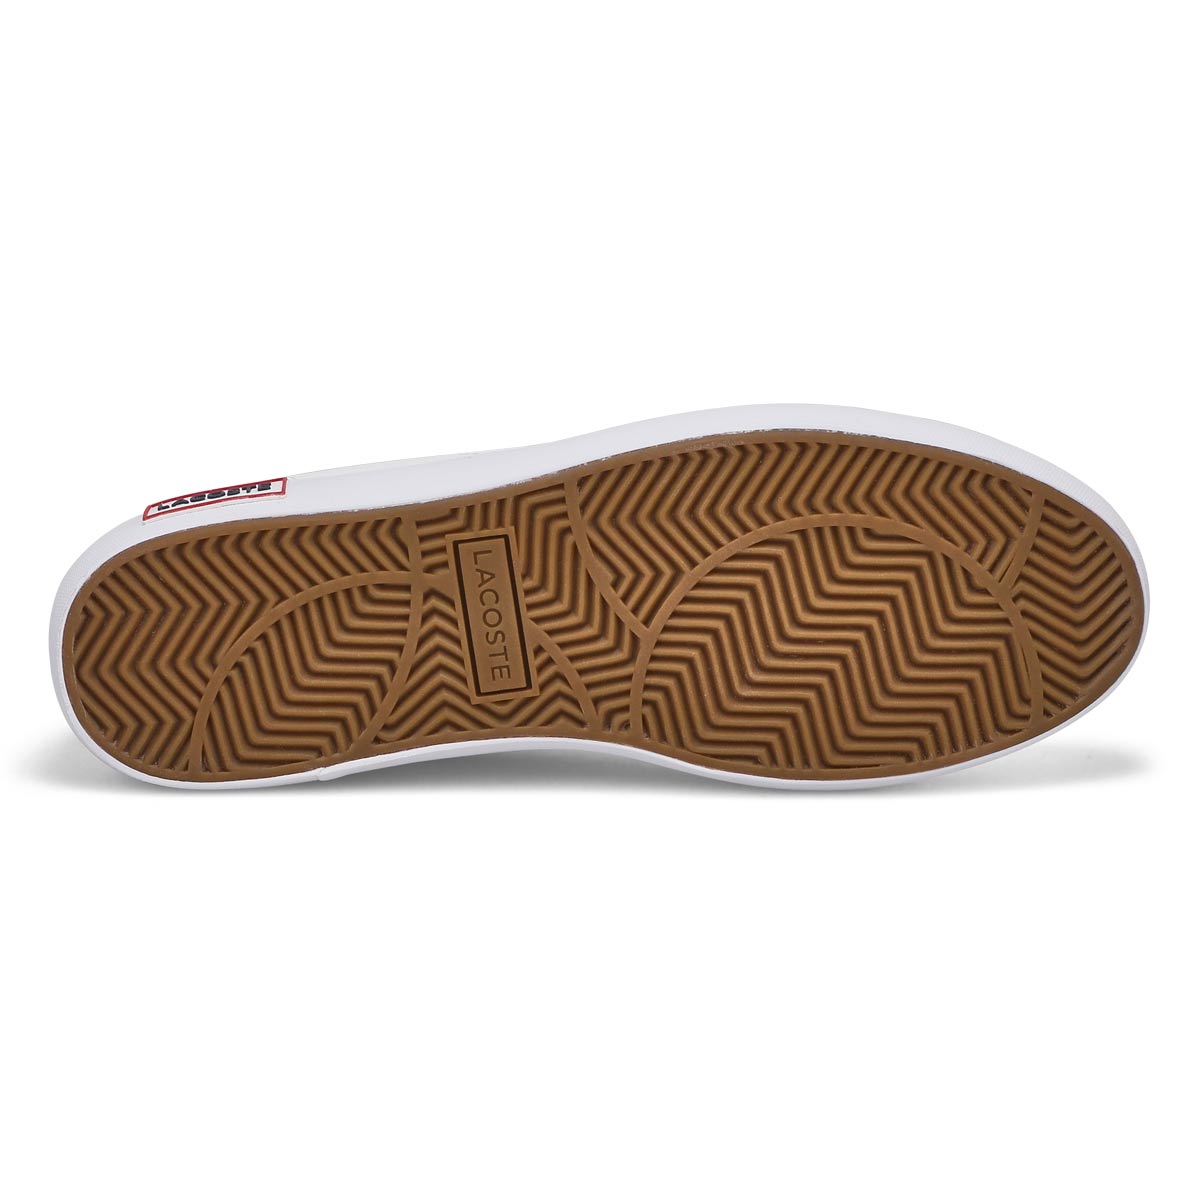 Men's Powercourt Leather Sneaker - White/Navy/Red